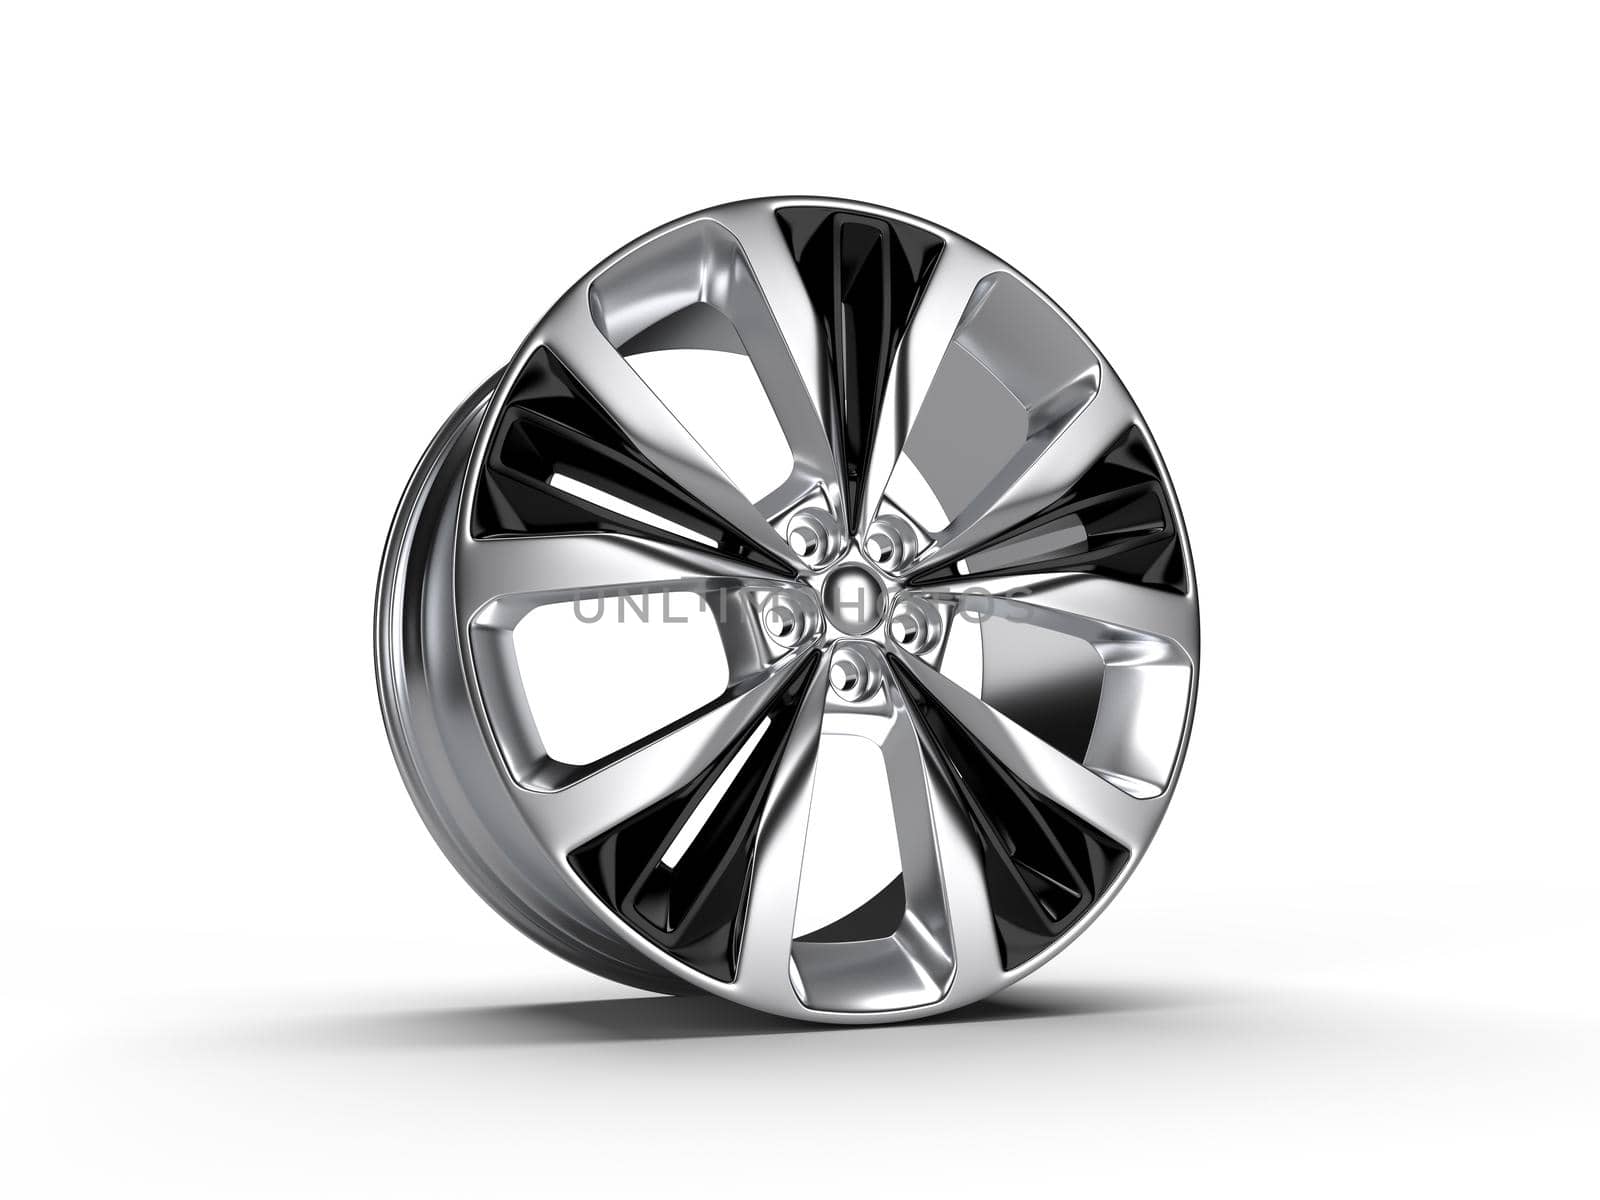 Racing Performance Aluminum Wheel Rim Cutout 3D rendering illustration.